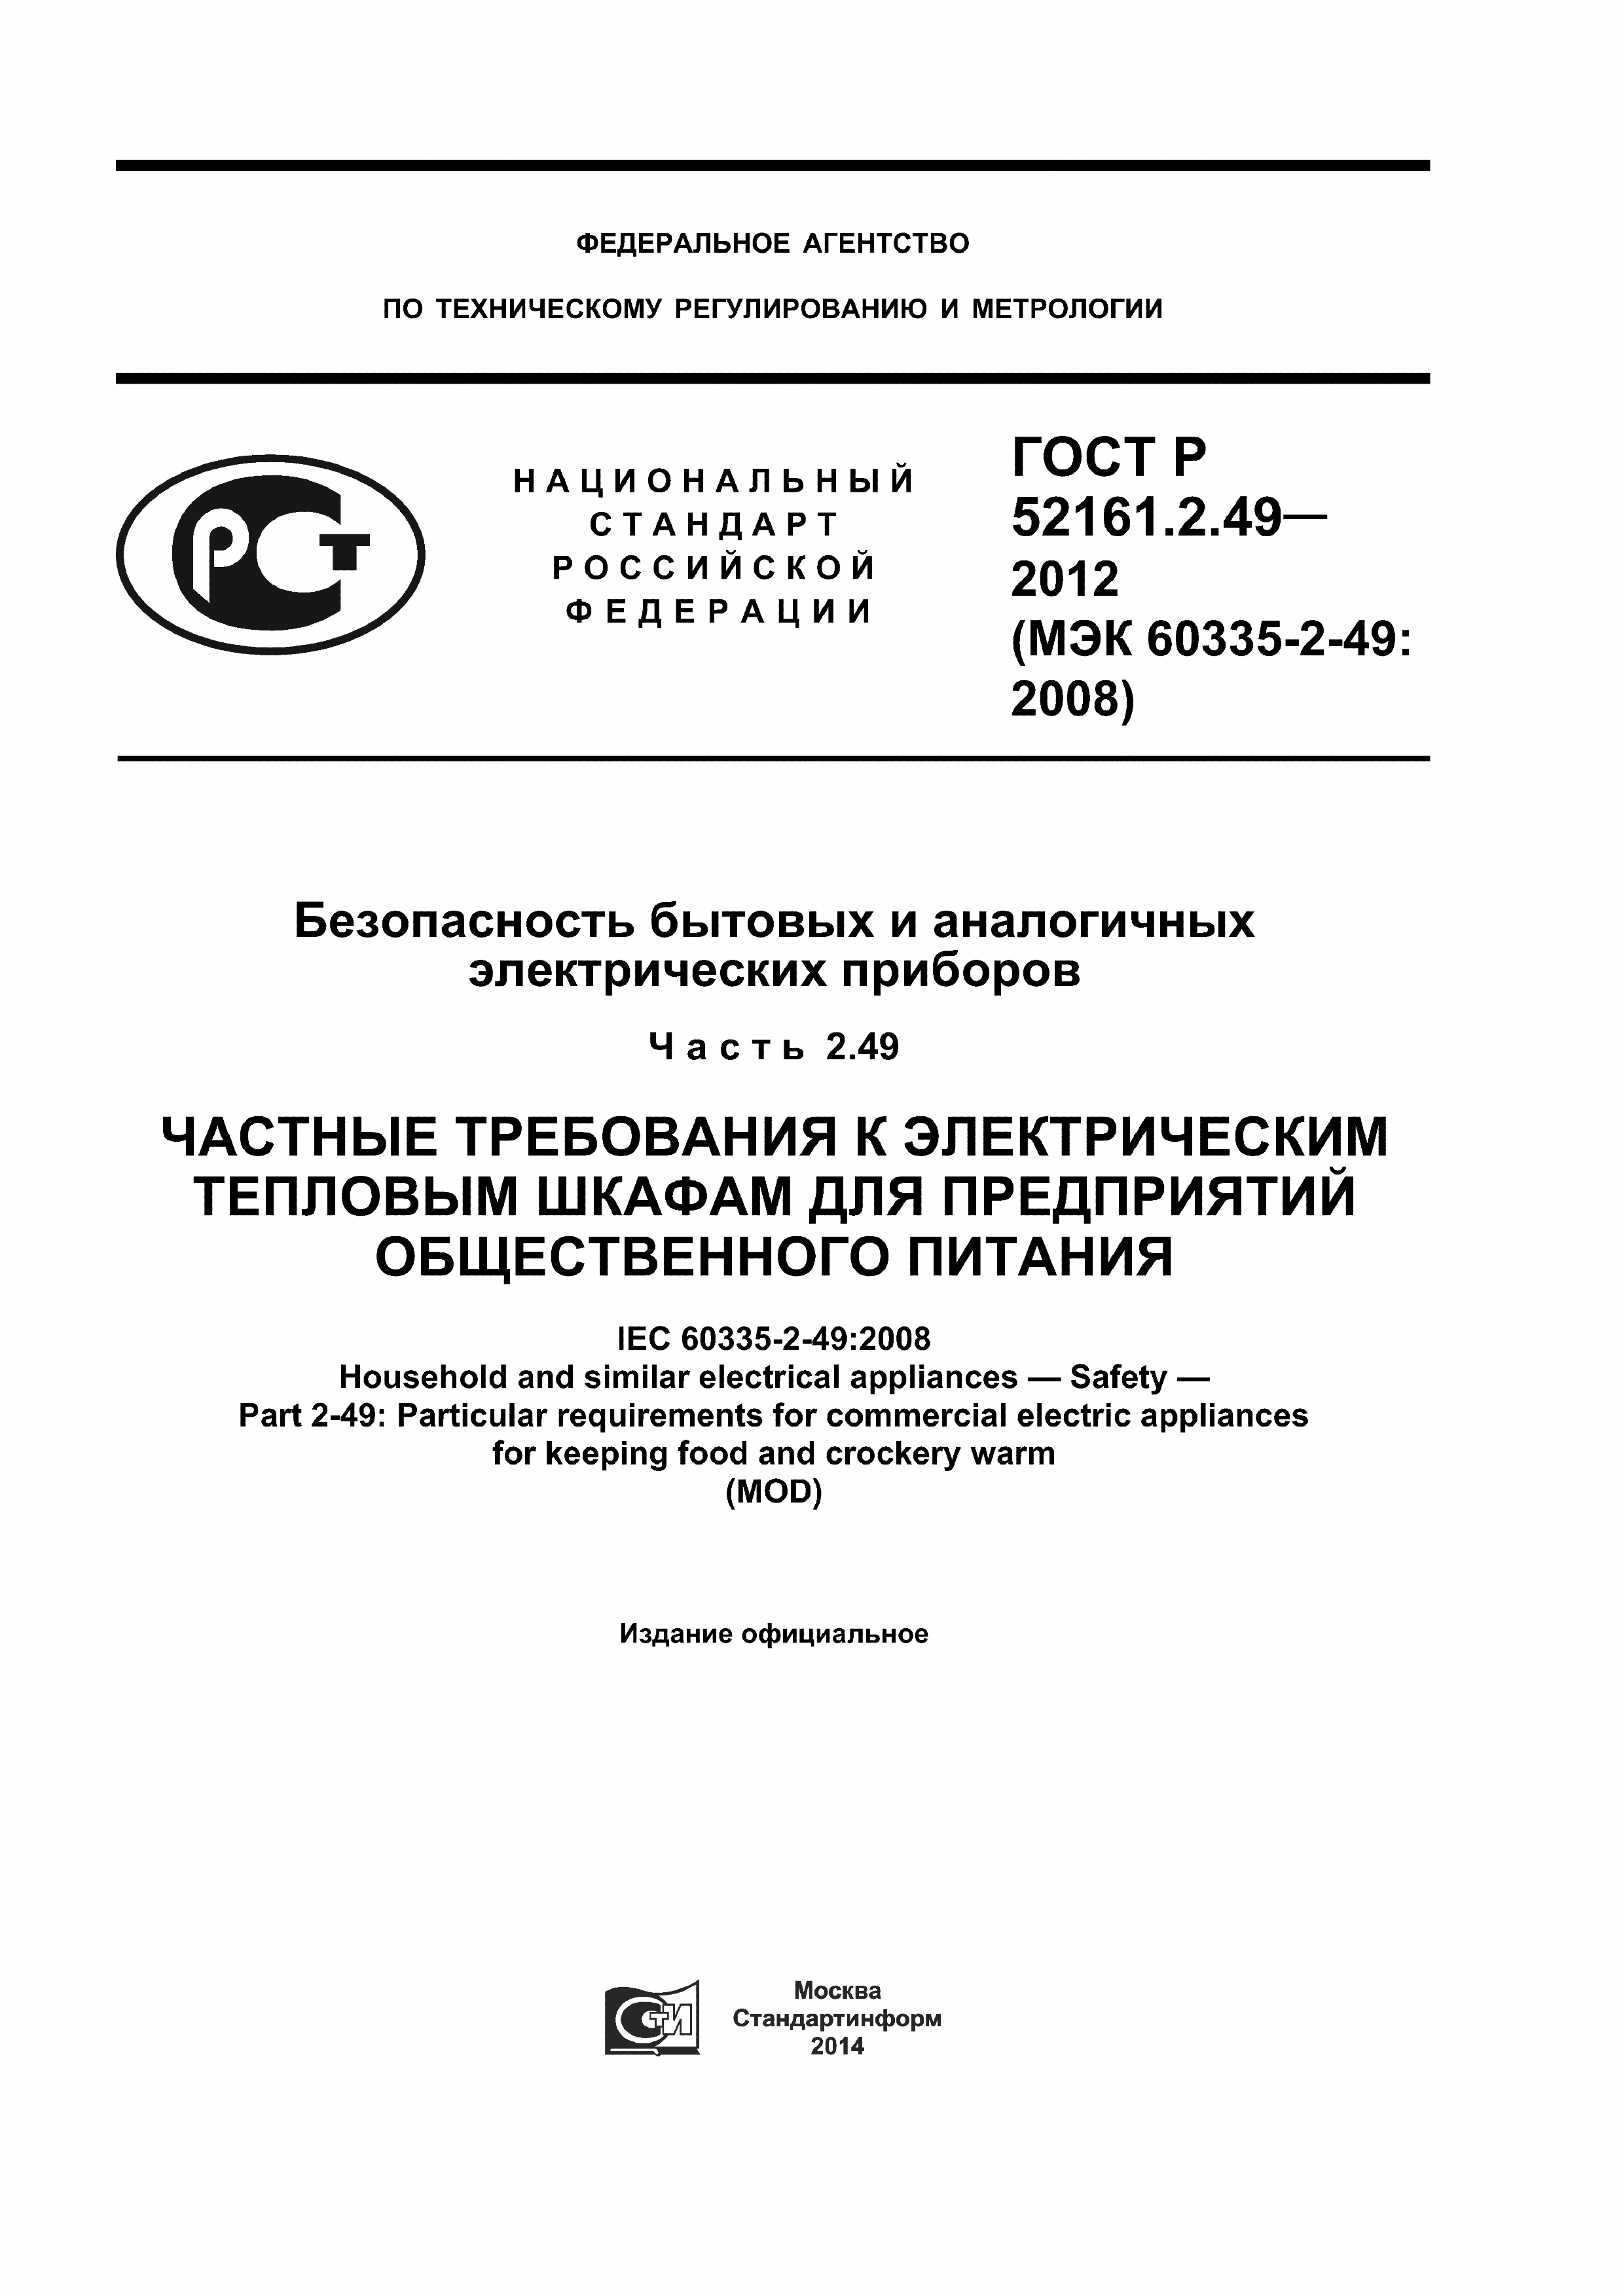 ГОСТ Р 52161.2.49-2012